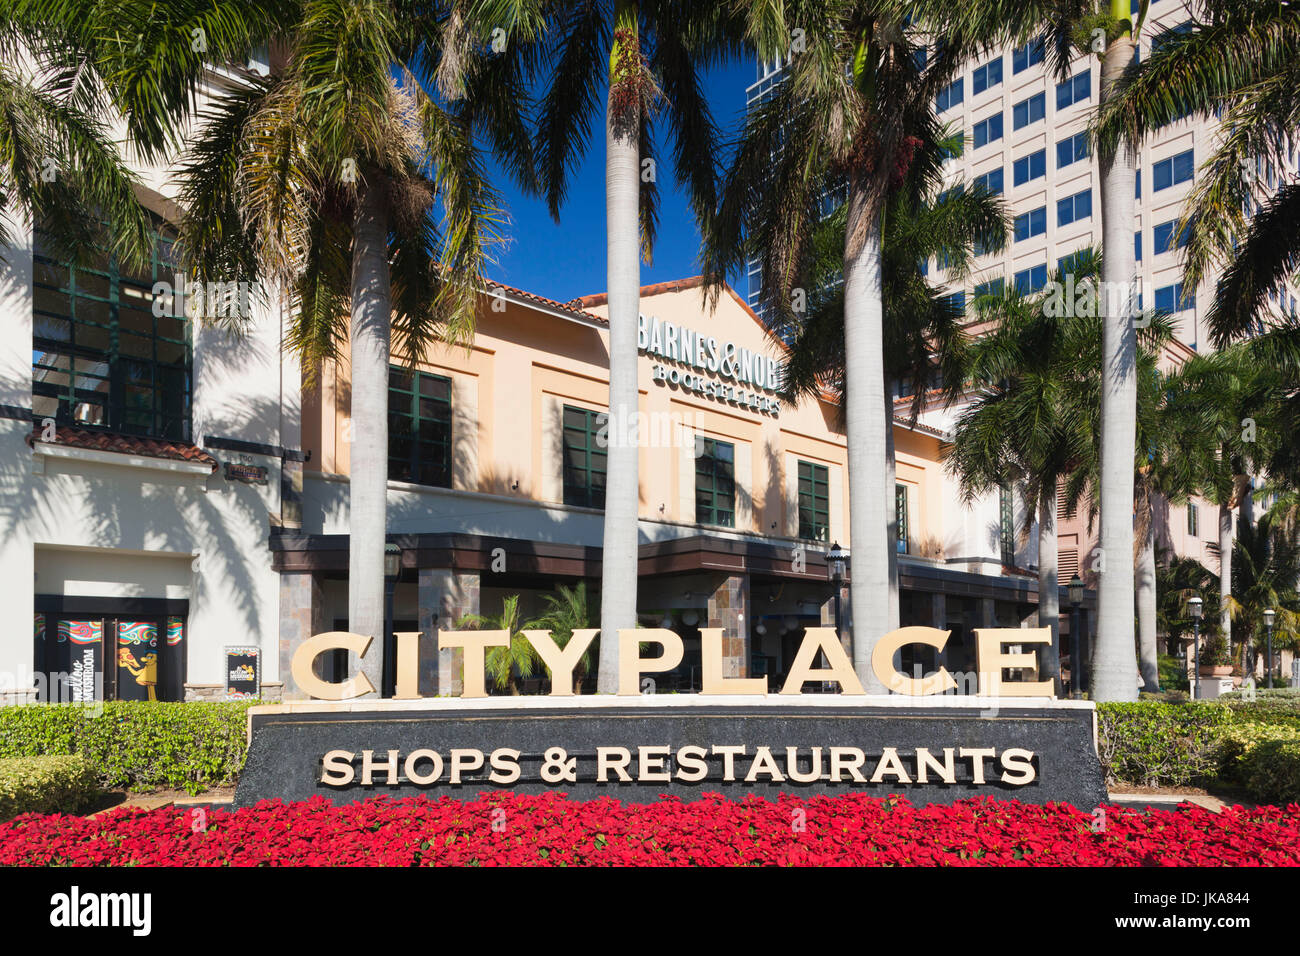 USA, Florida, West Palm Beach, City Place Mall Stockfoto